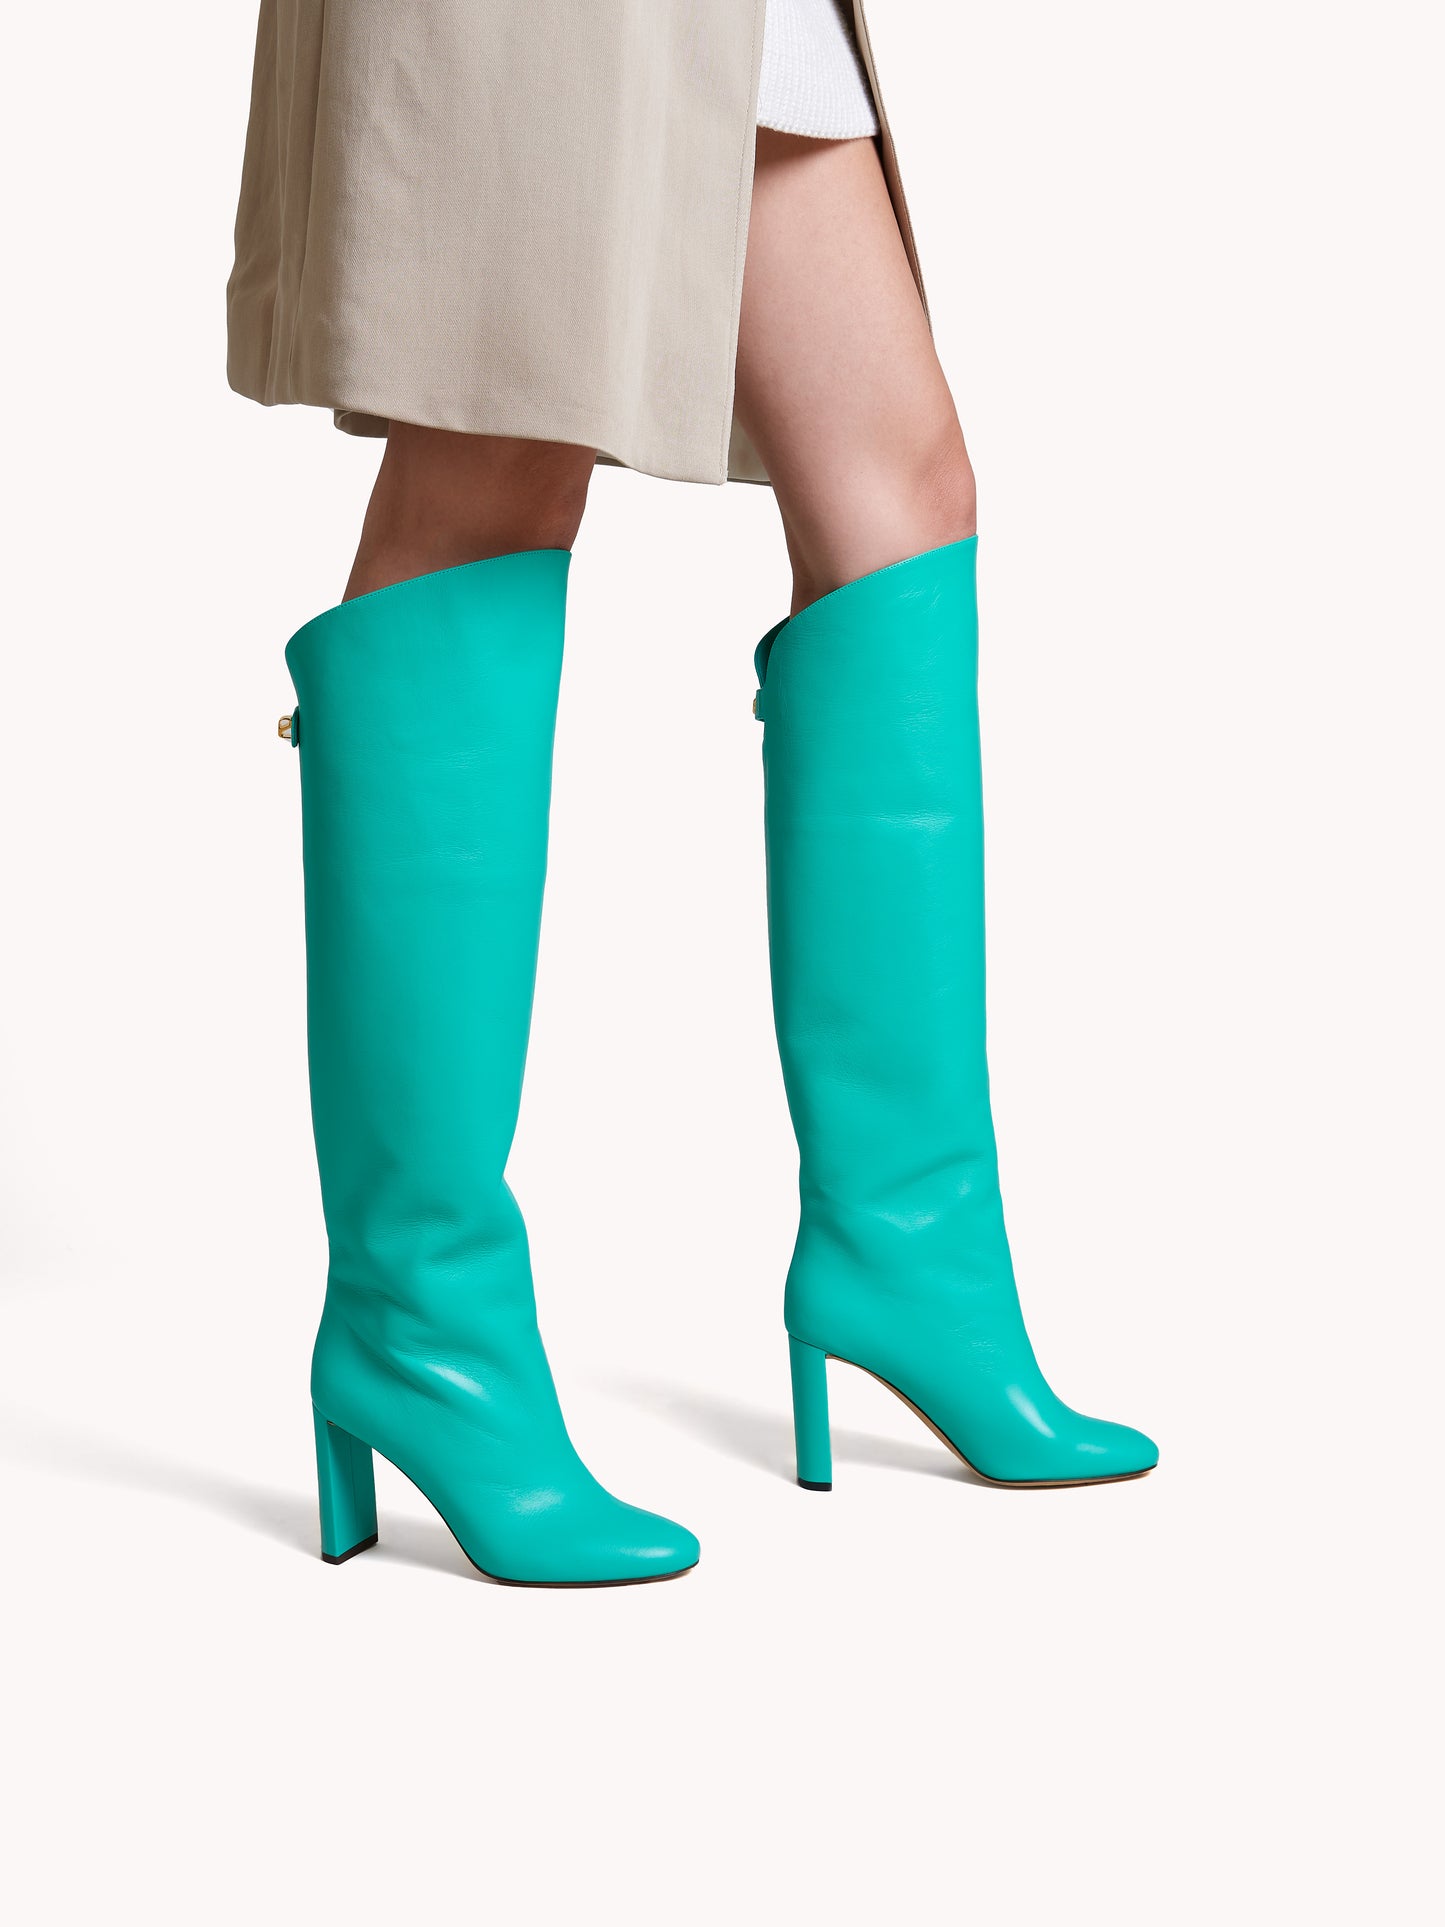 Adriana High-heel Nappa Turquoise Leather Boots